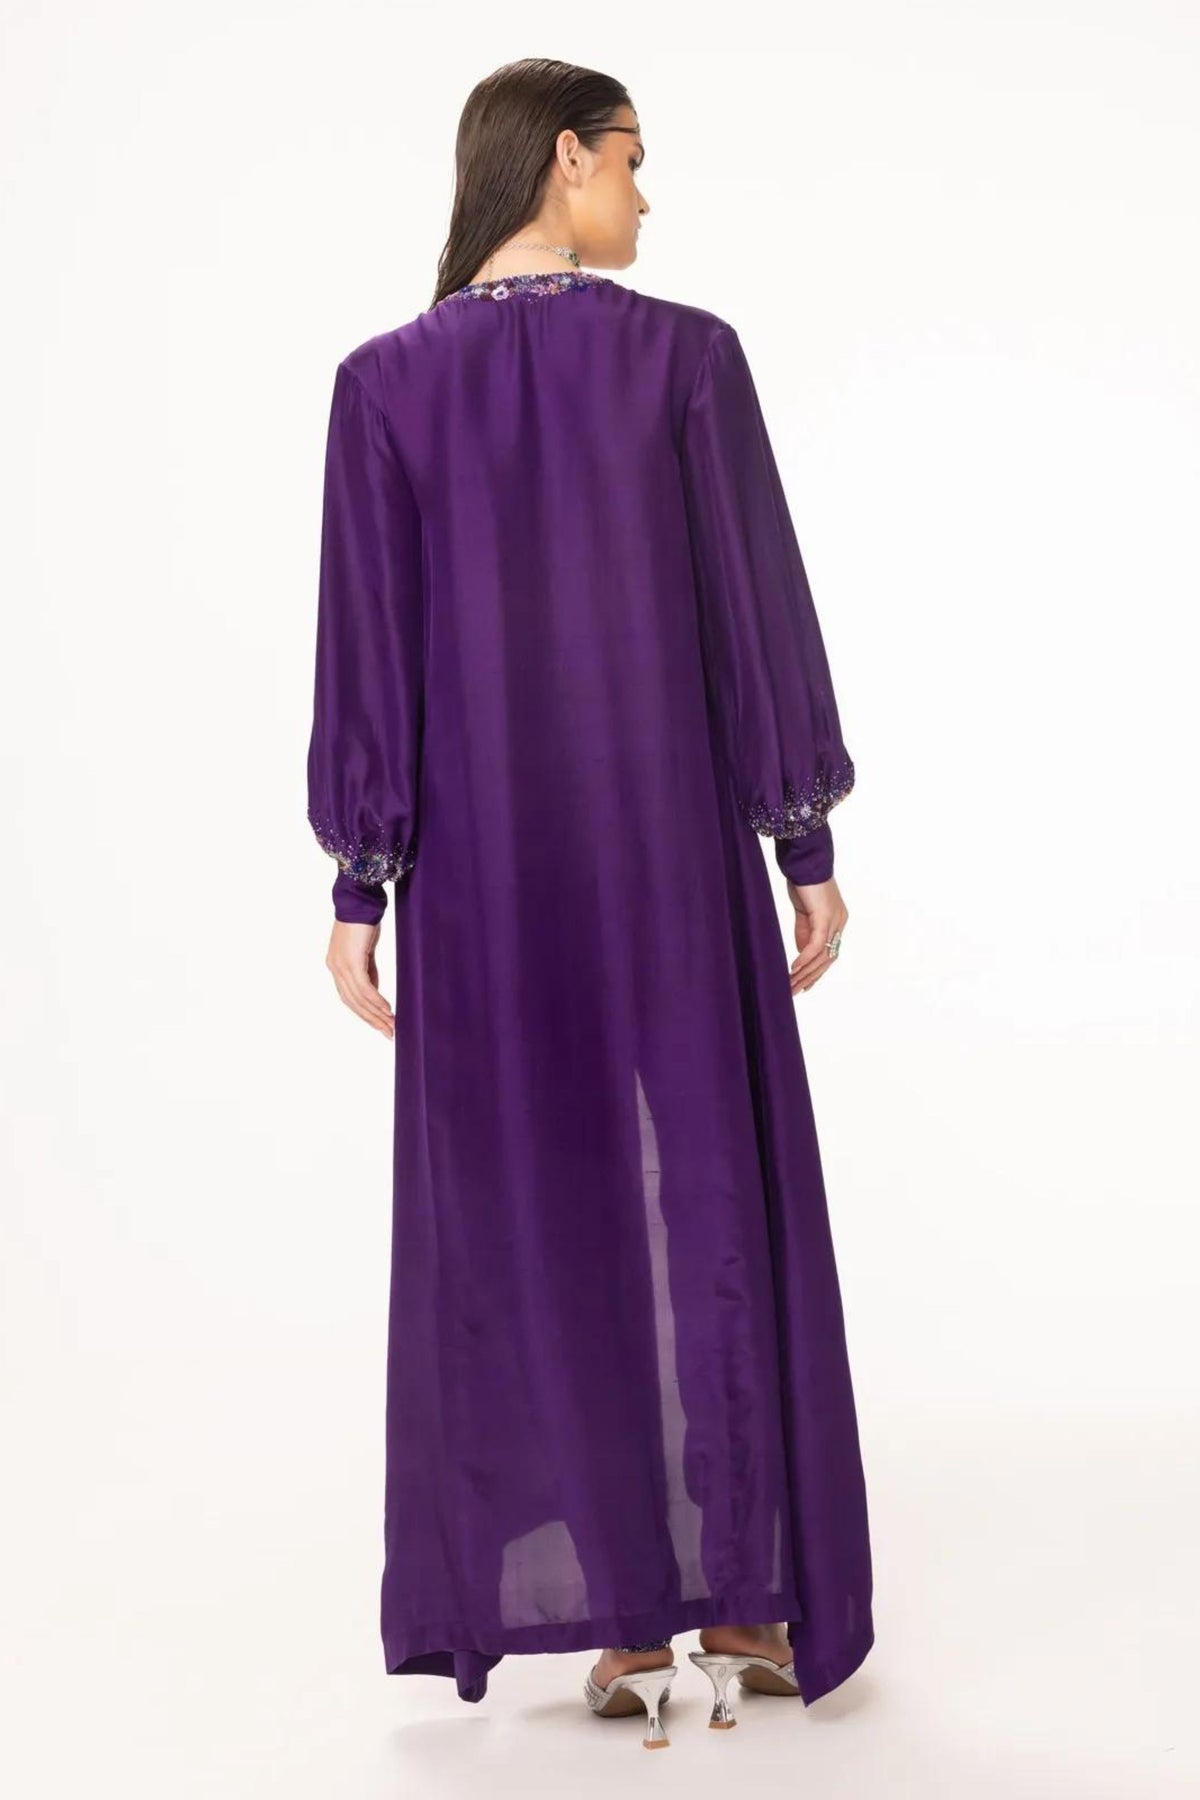 Purple Long Bell Sleeves Dress